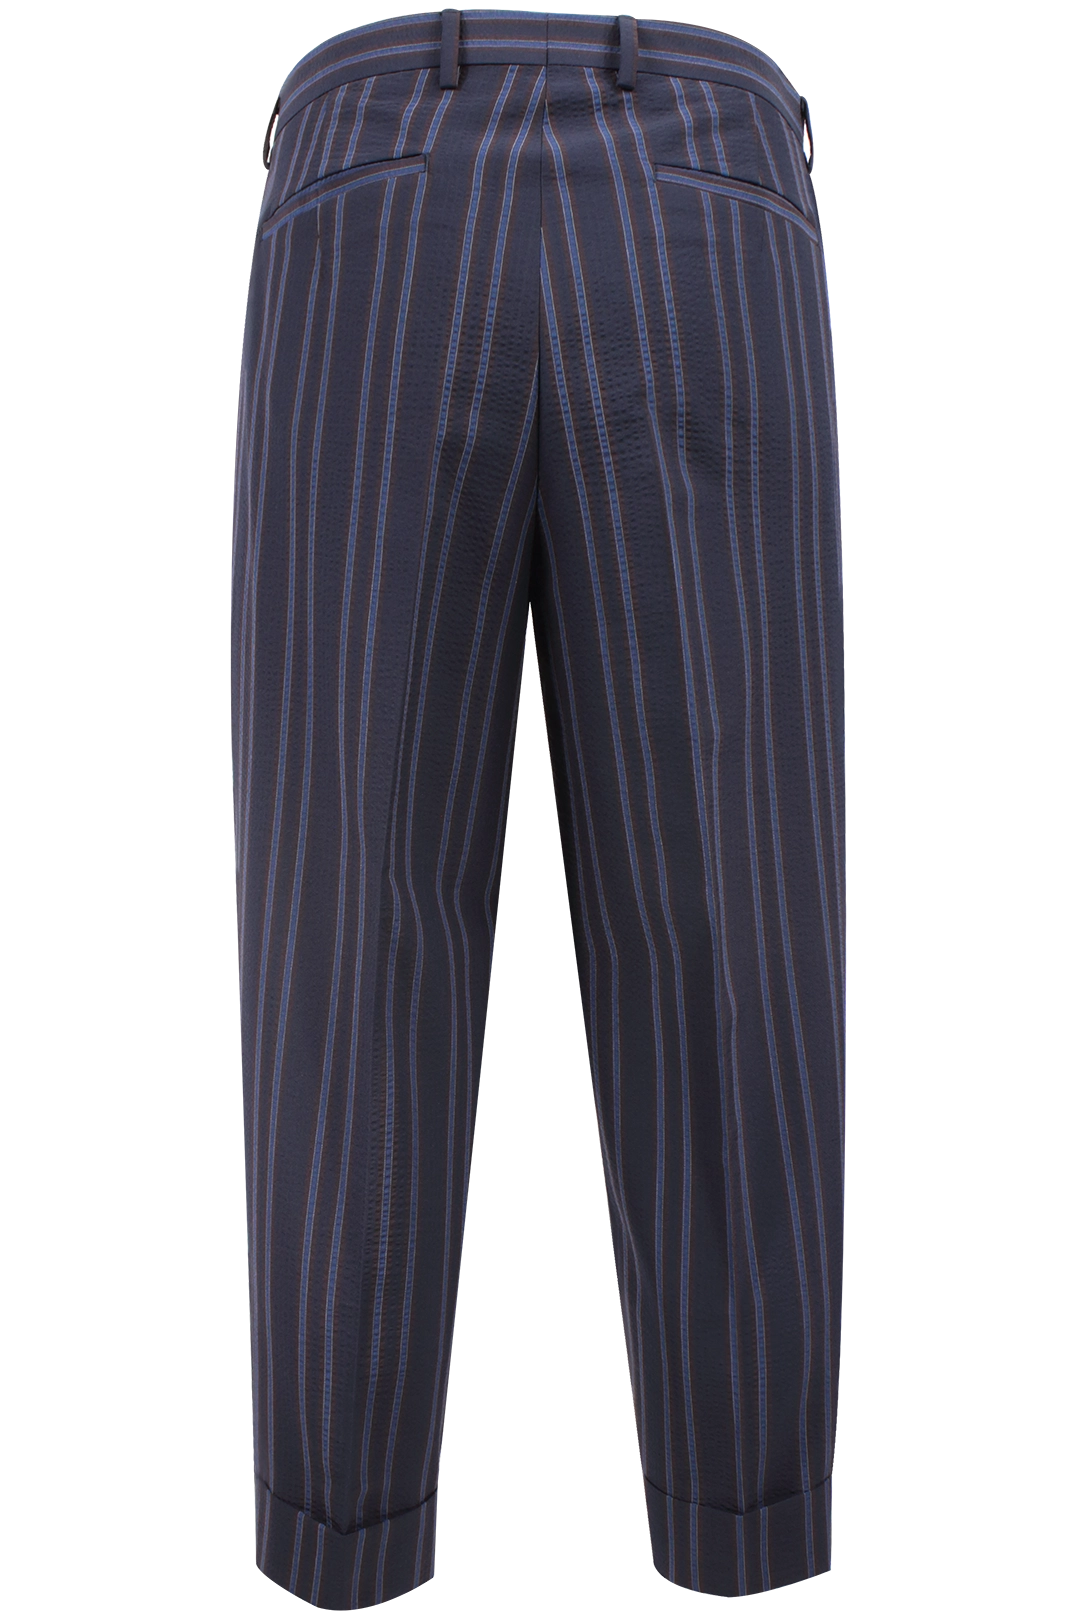 Pantalone Japan lana seersucker righe blu retro